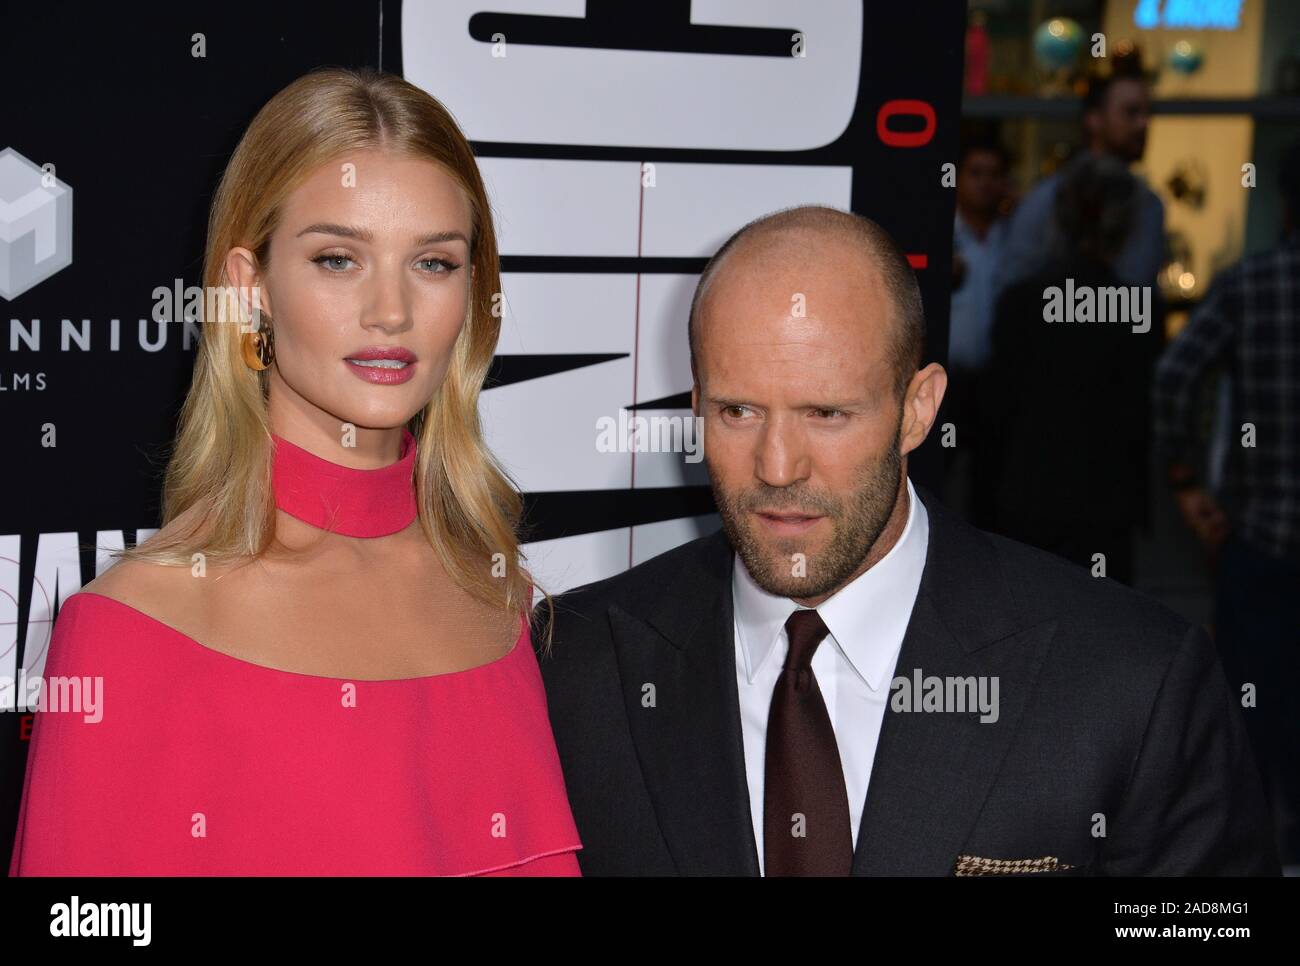 LOS ANGELES, CA. August 22, 2016: Actor Jason Statham & girlfriend  actress/model Rosie Huntington-Whiteley